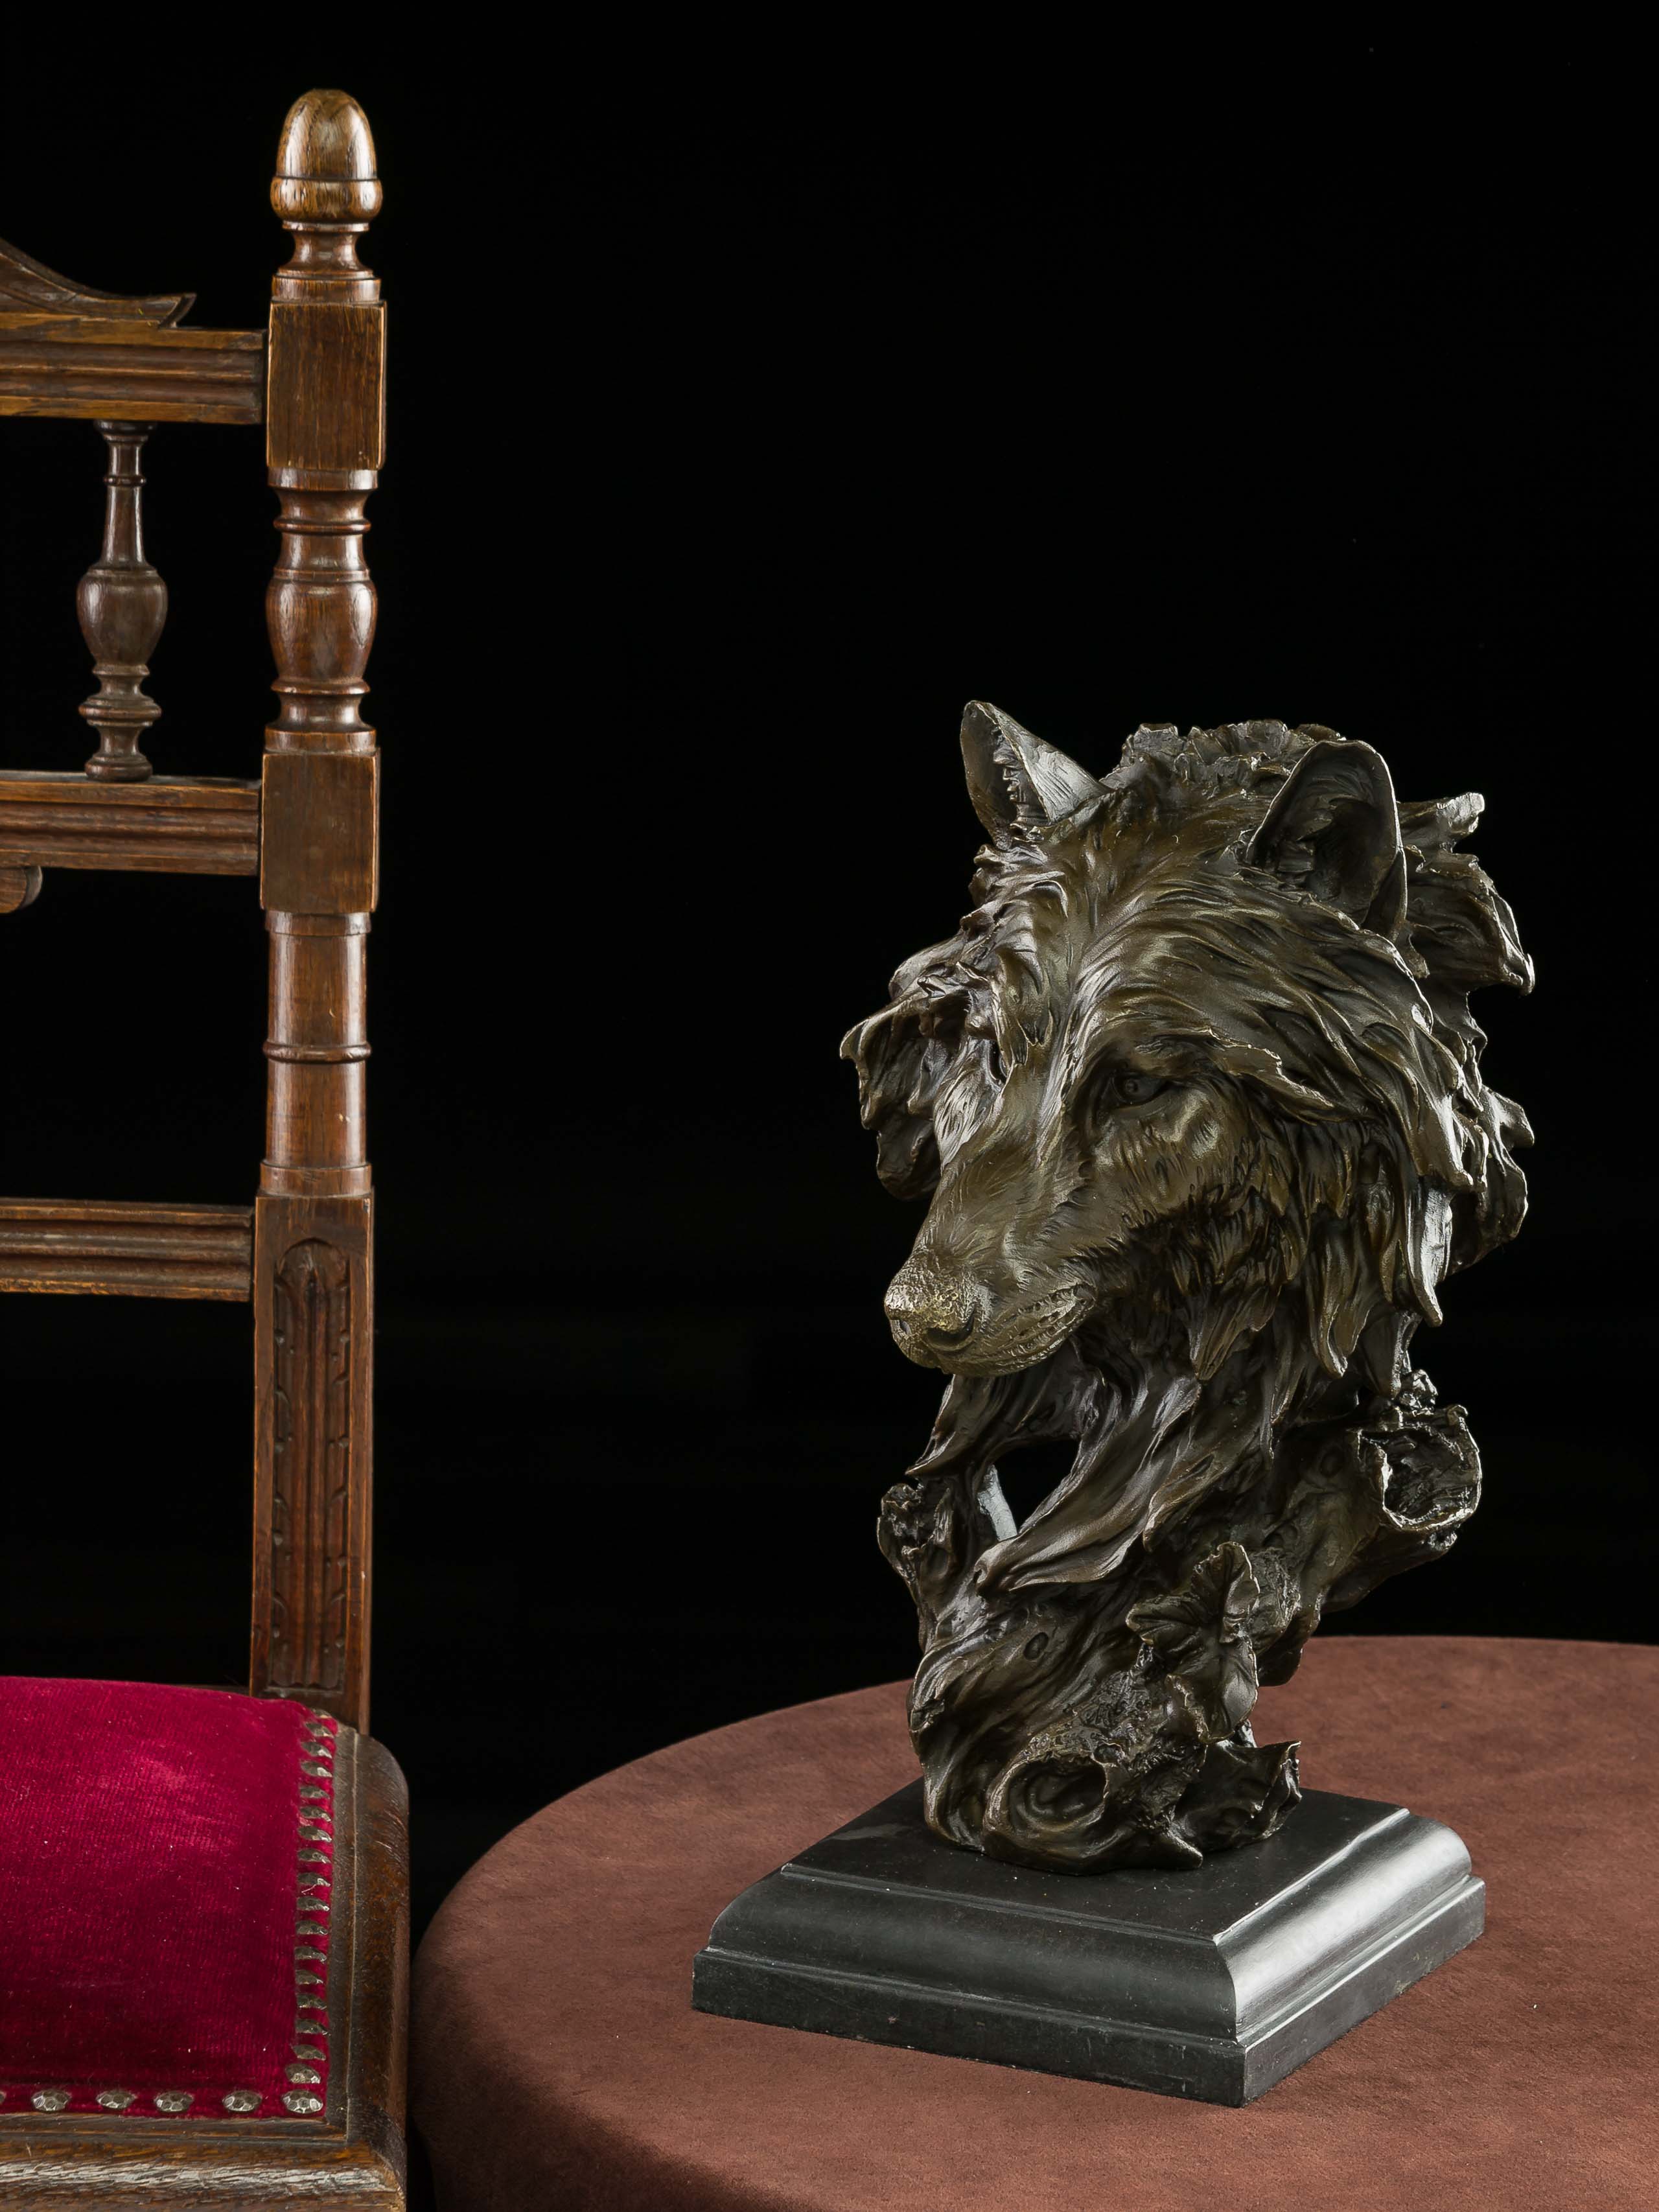 Grande sculpture en bronze à tête de loup Statue de figurine de